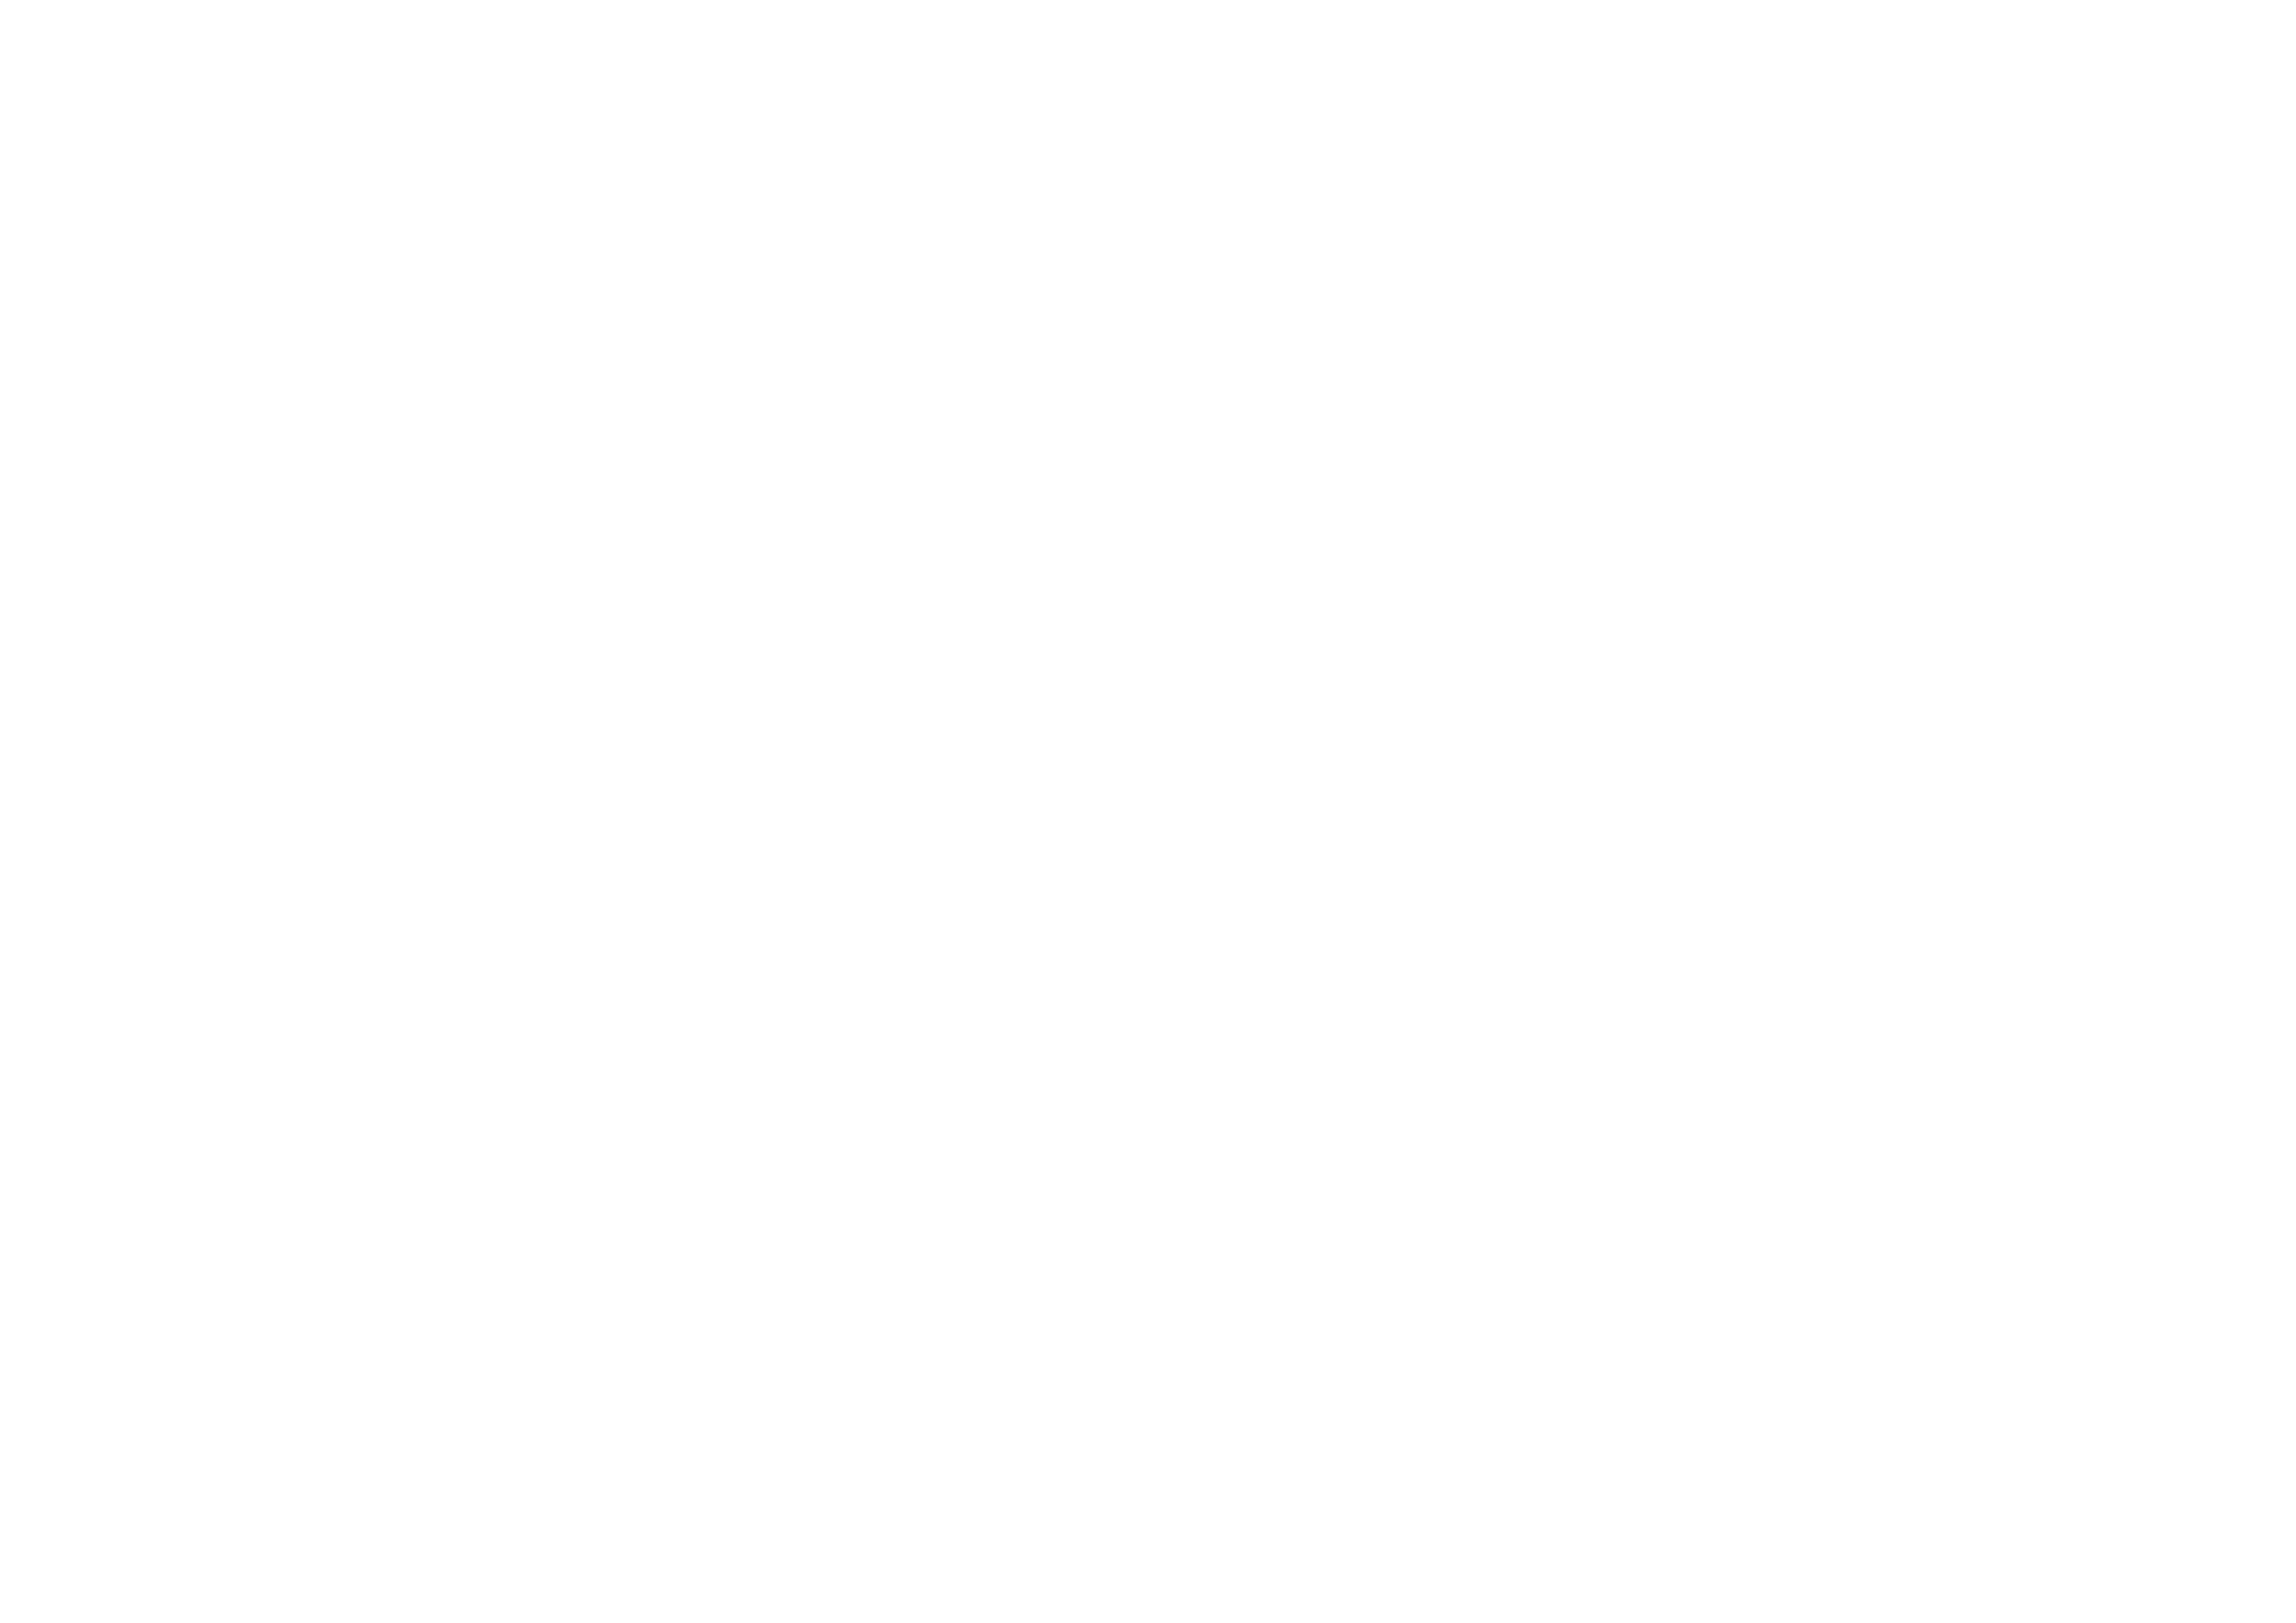 postcode